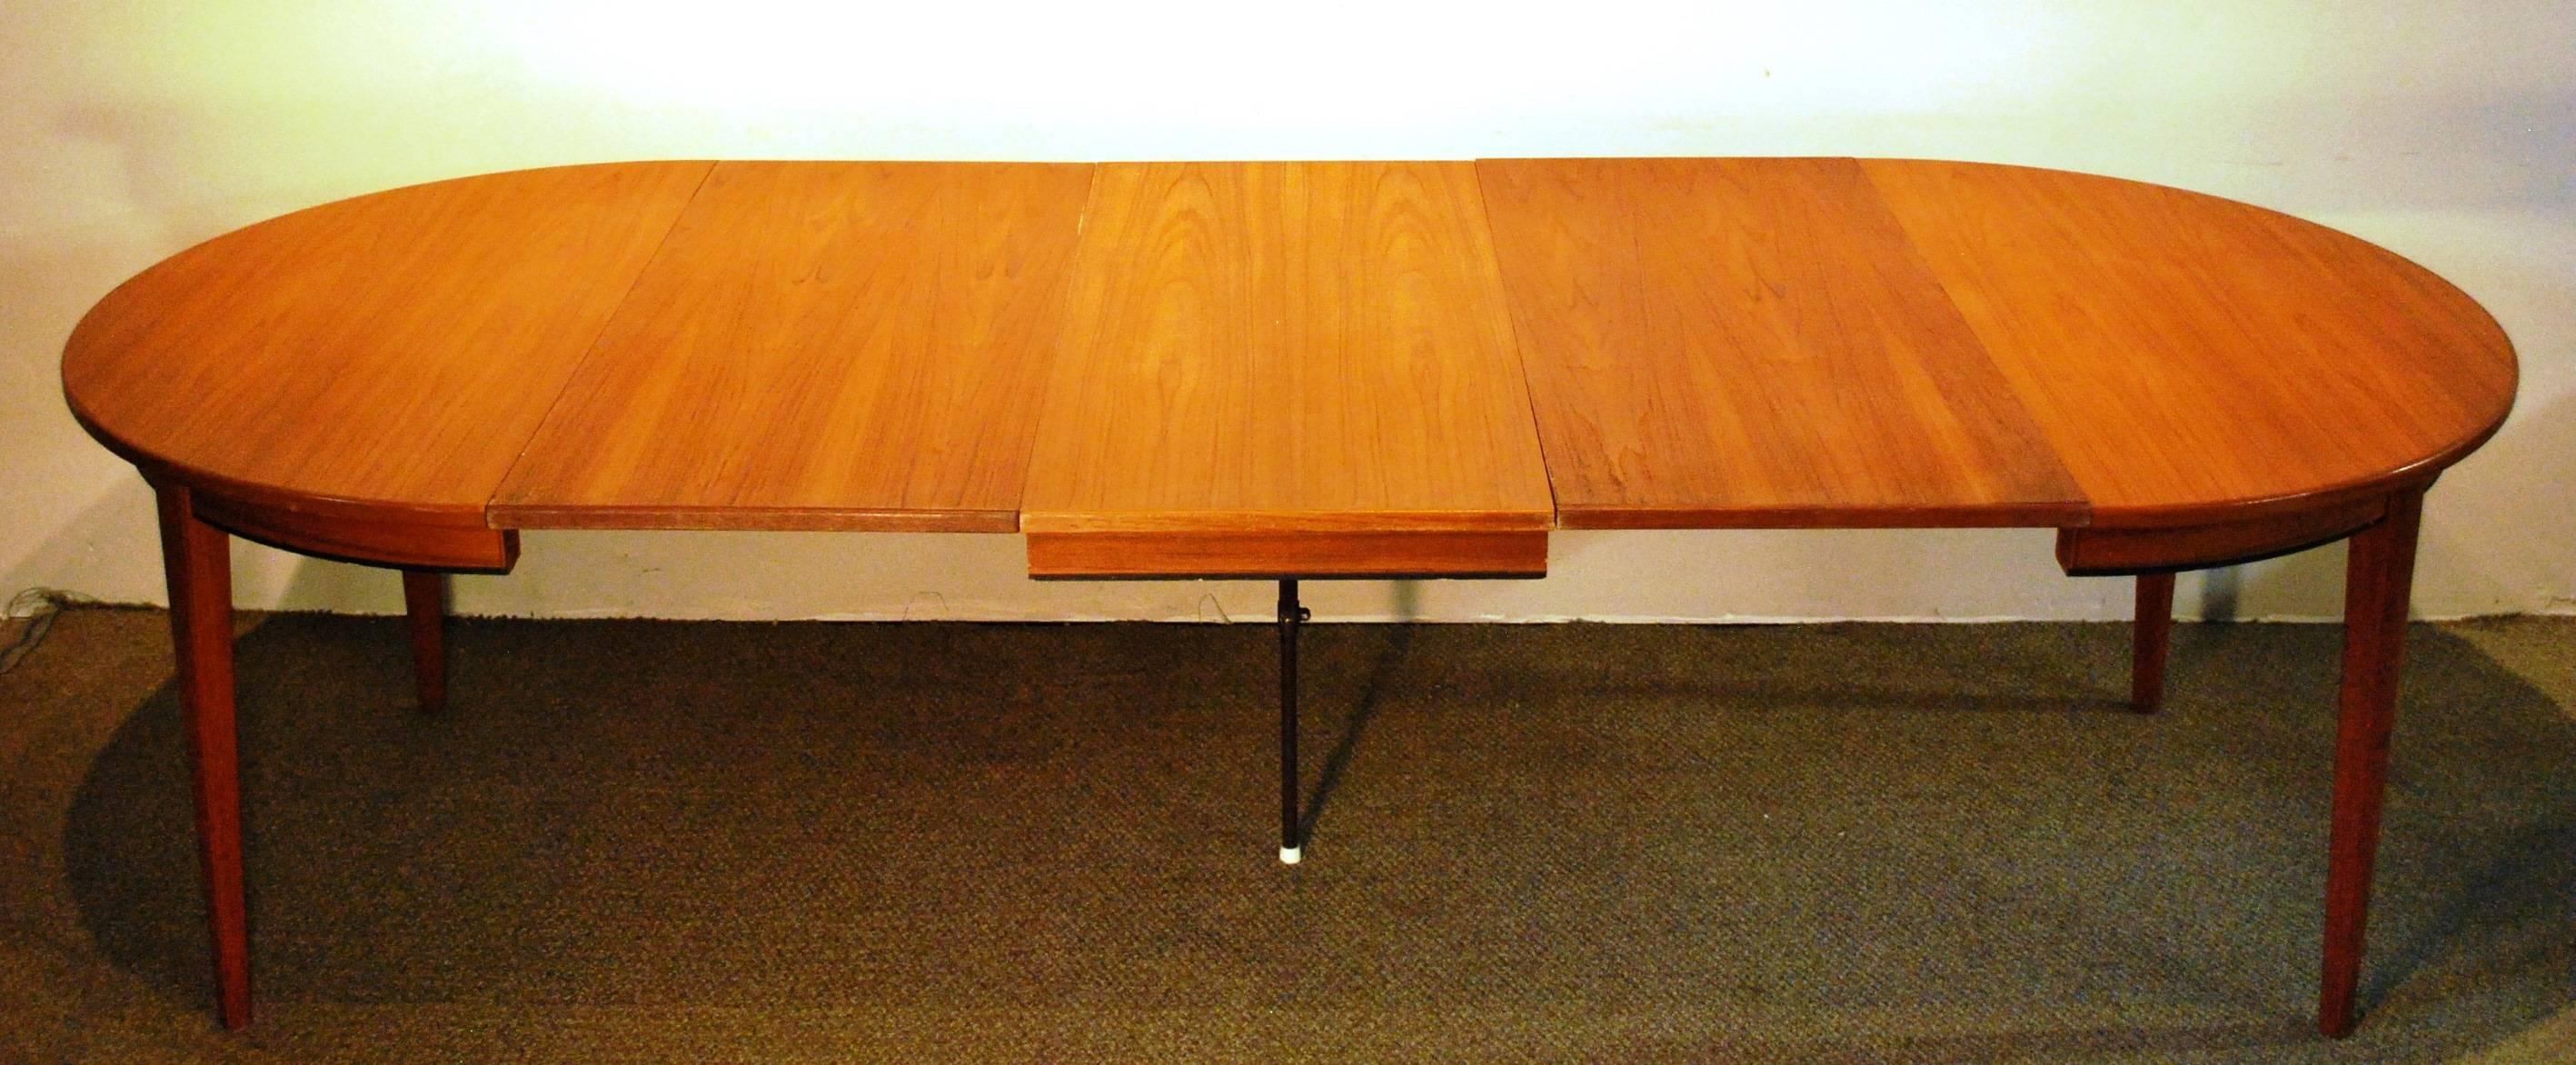 Gunni Omann Designed Mid-Century Teak Table with Three Leaves, circa 1960 For Sale 2